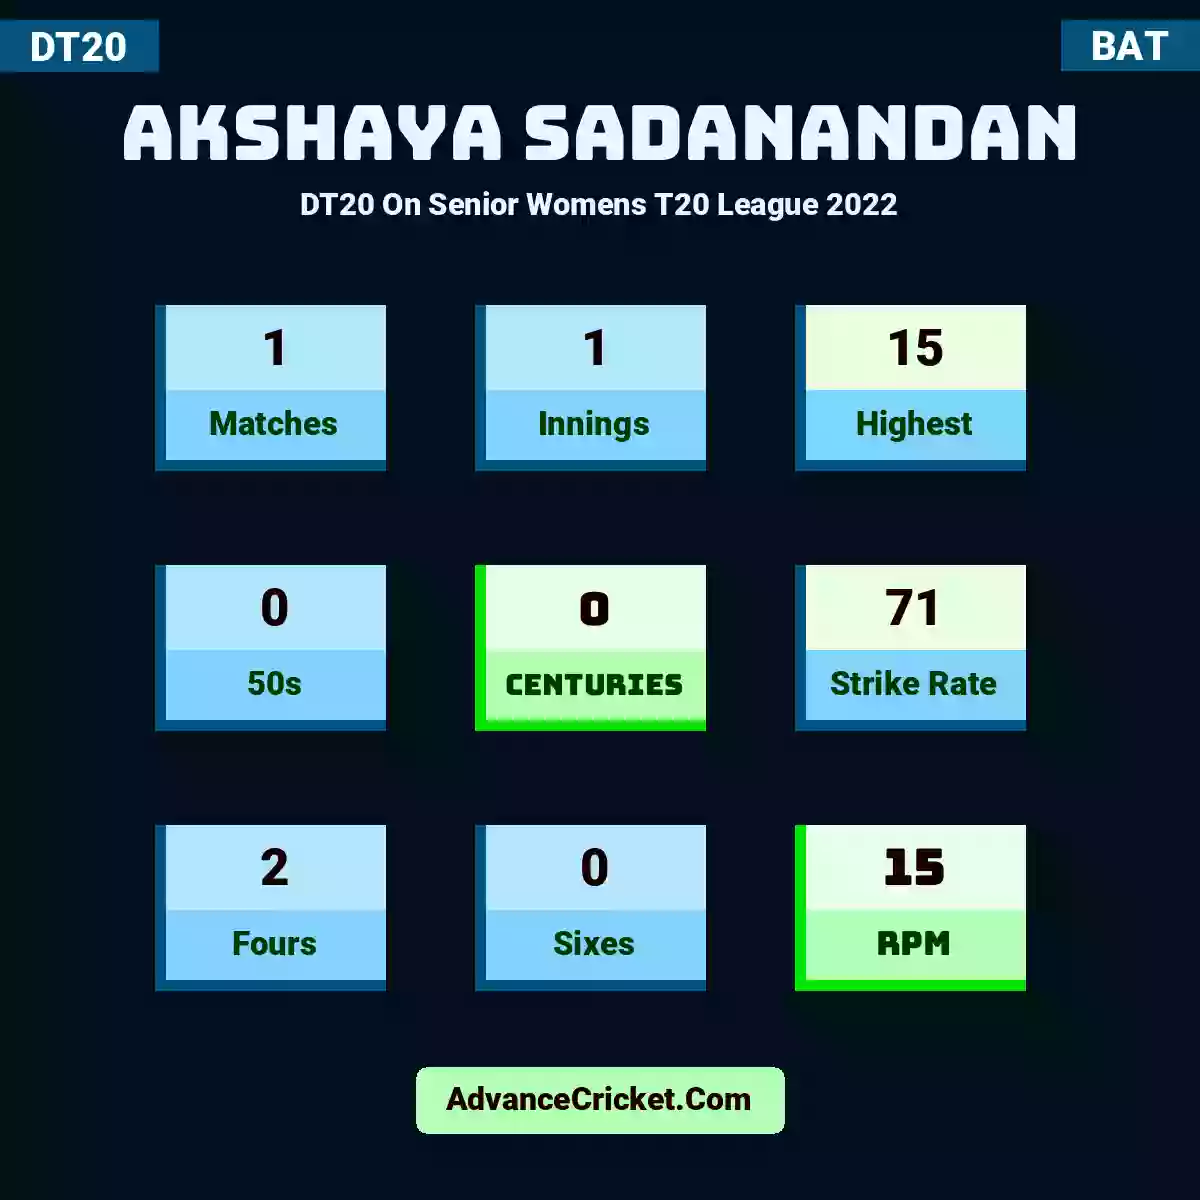 Akshaya Sadanandan DT20  On Senior Womens T20 League 2022, Akshaya Sadanandan played 1 matches, scored 15 runs as highest, 0 half-centuries, and 0 centuries, with a strike rate of 71. A.Sadanandan hit 2 fours and 0 sixes, with an RPM of 15.